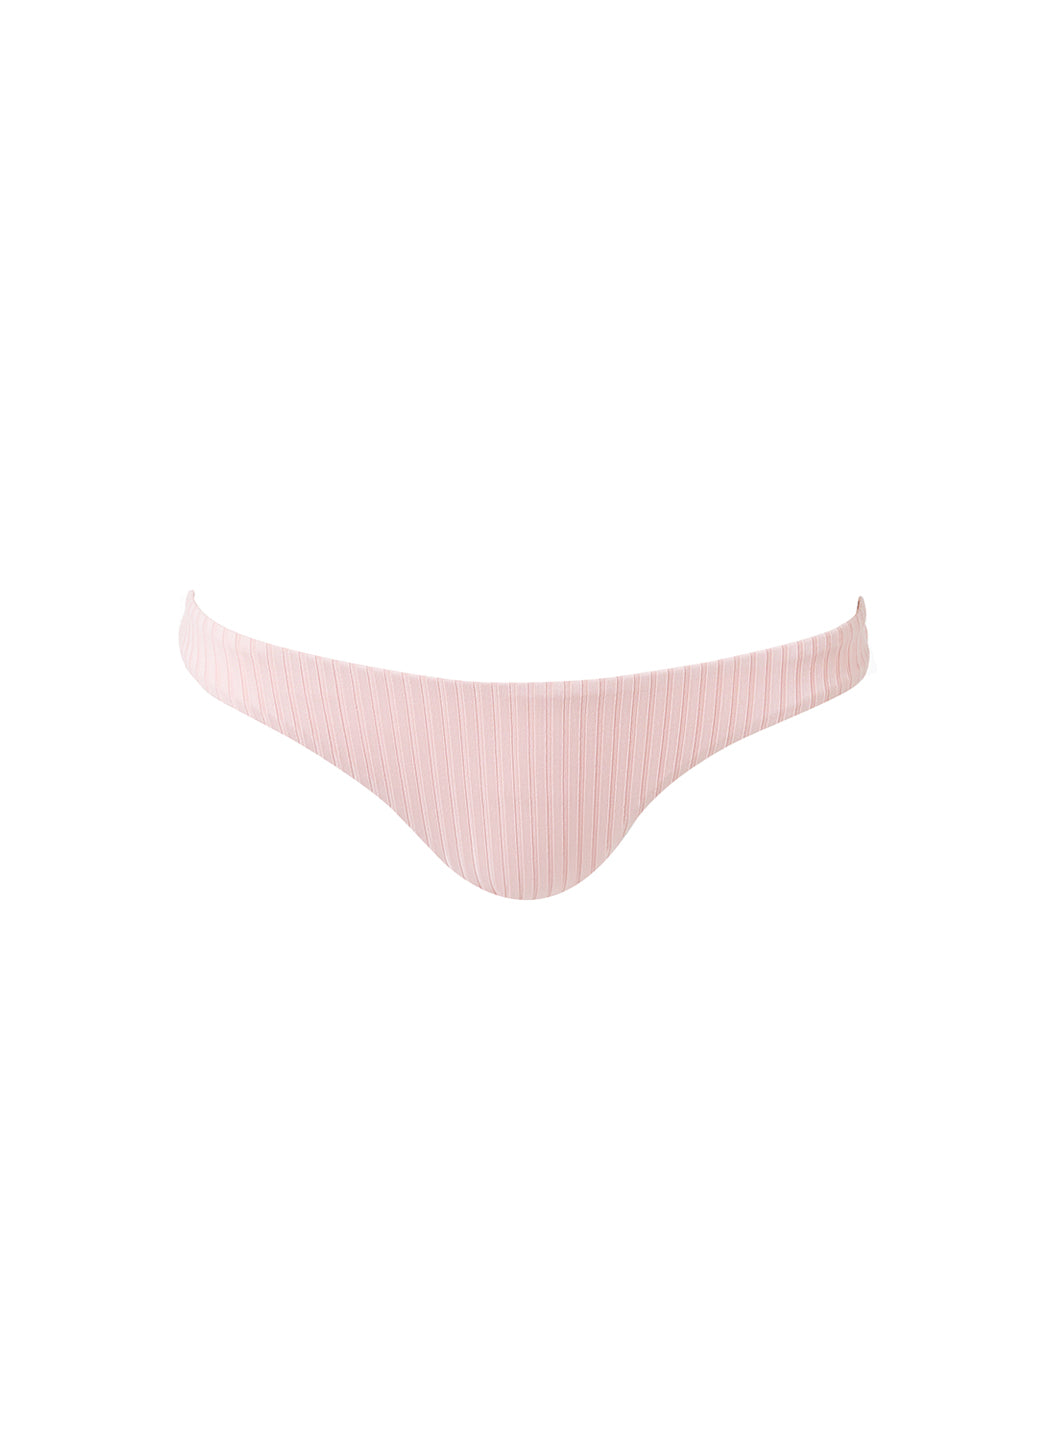 brisbane-rose-ribbed-bikini-bottom_cutout